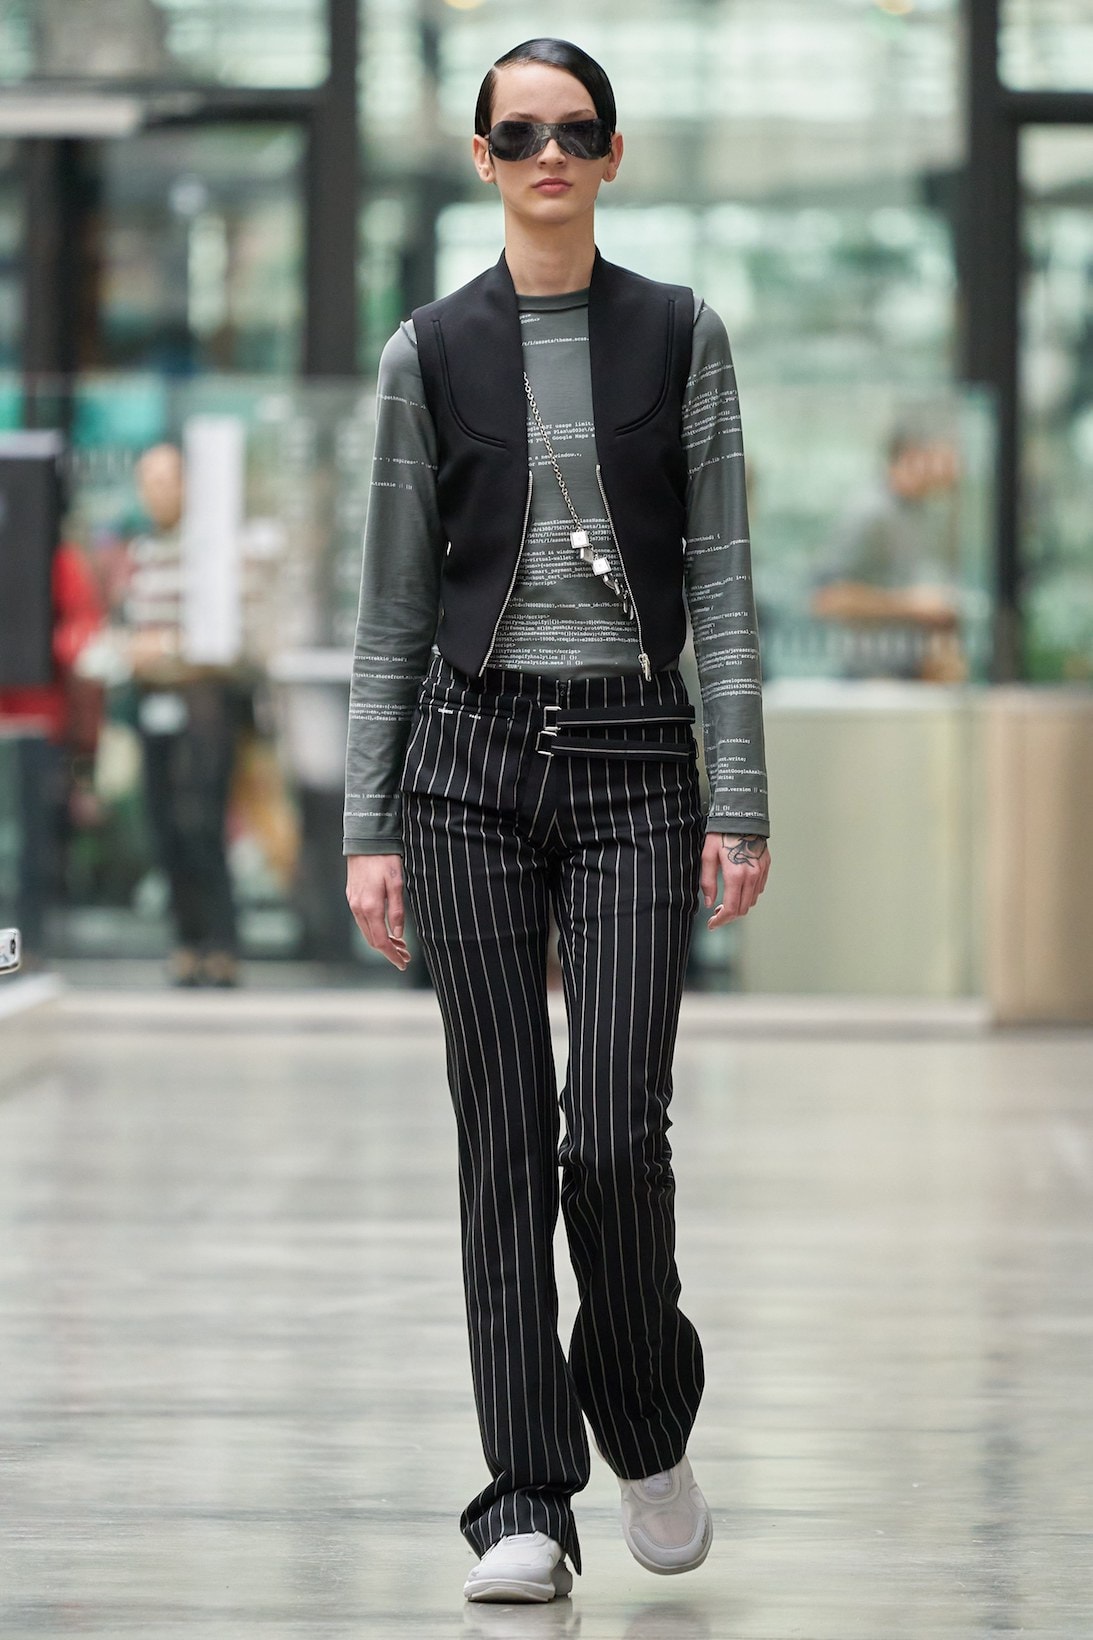 coperni sebastien meyer arnaud vaillant paris fashion week fall winter collection striped pants grey top